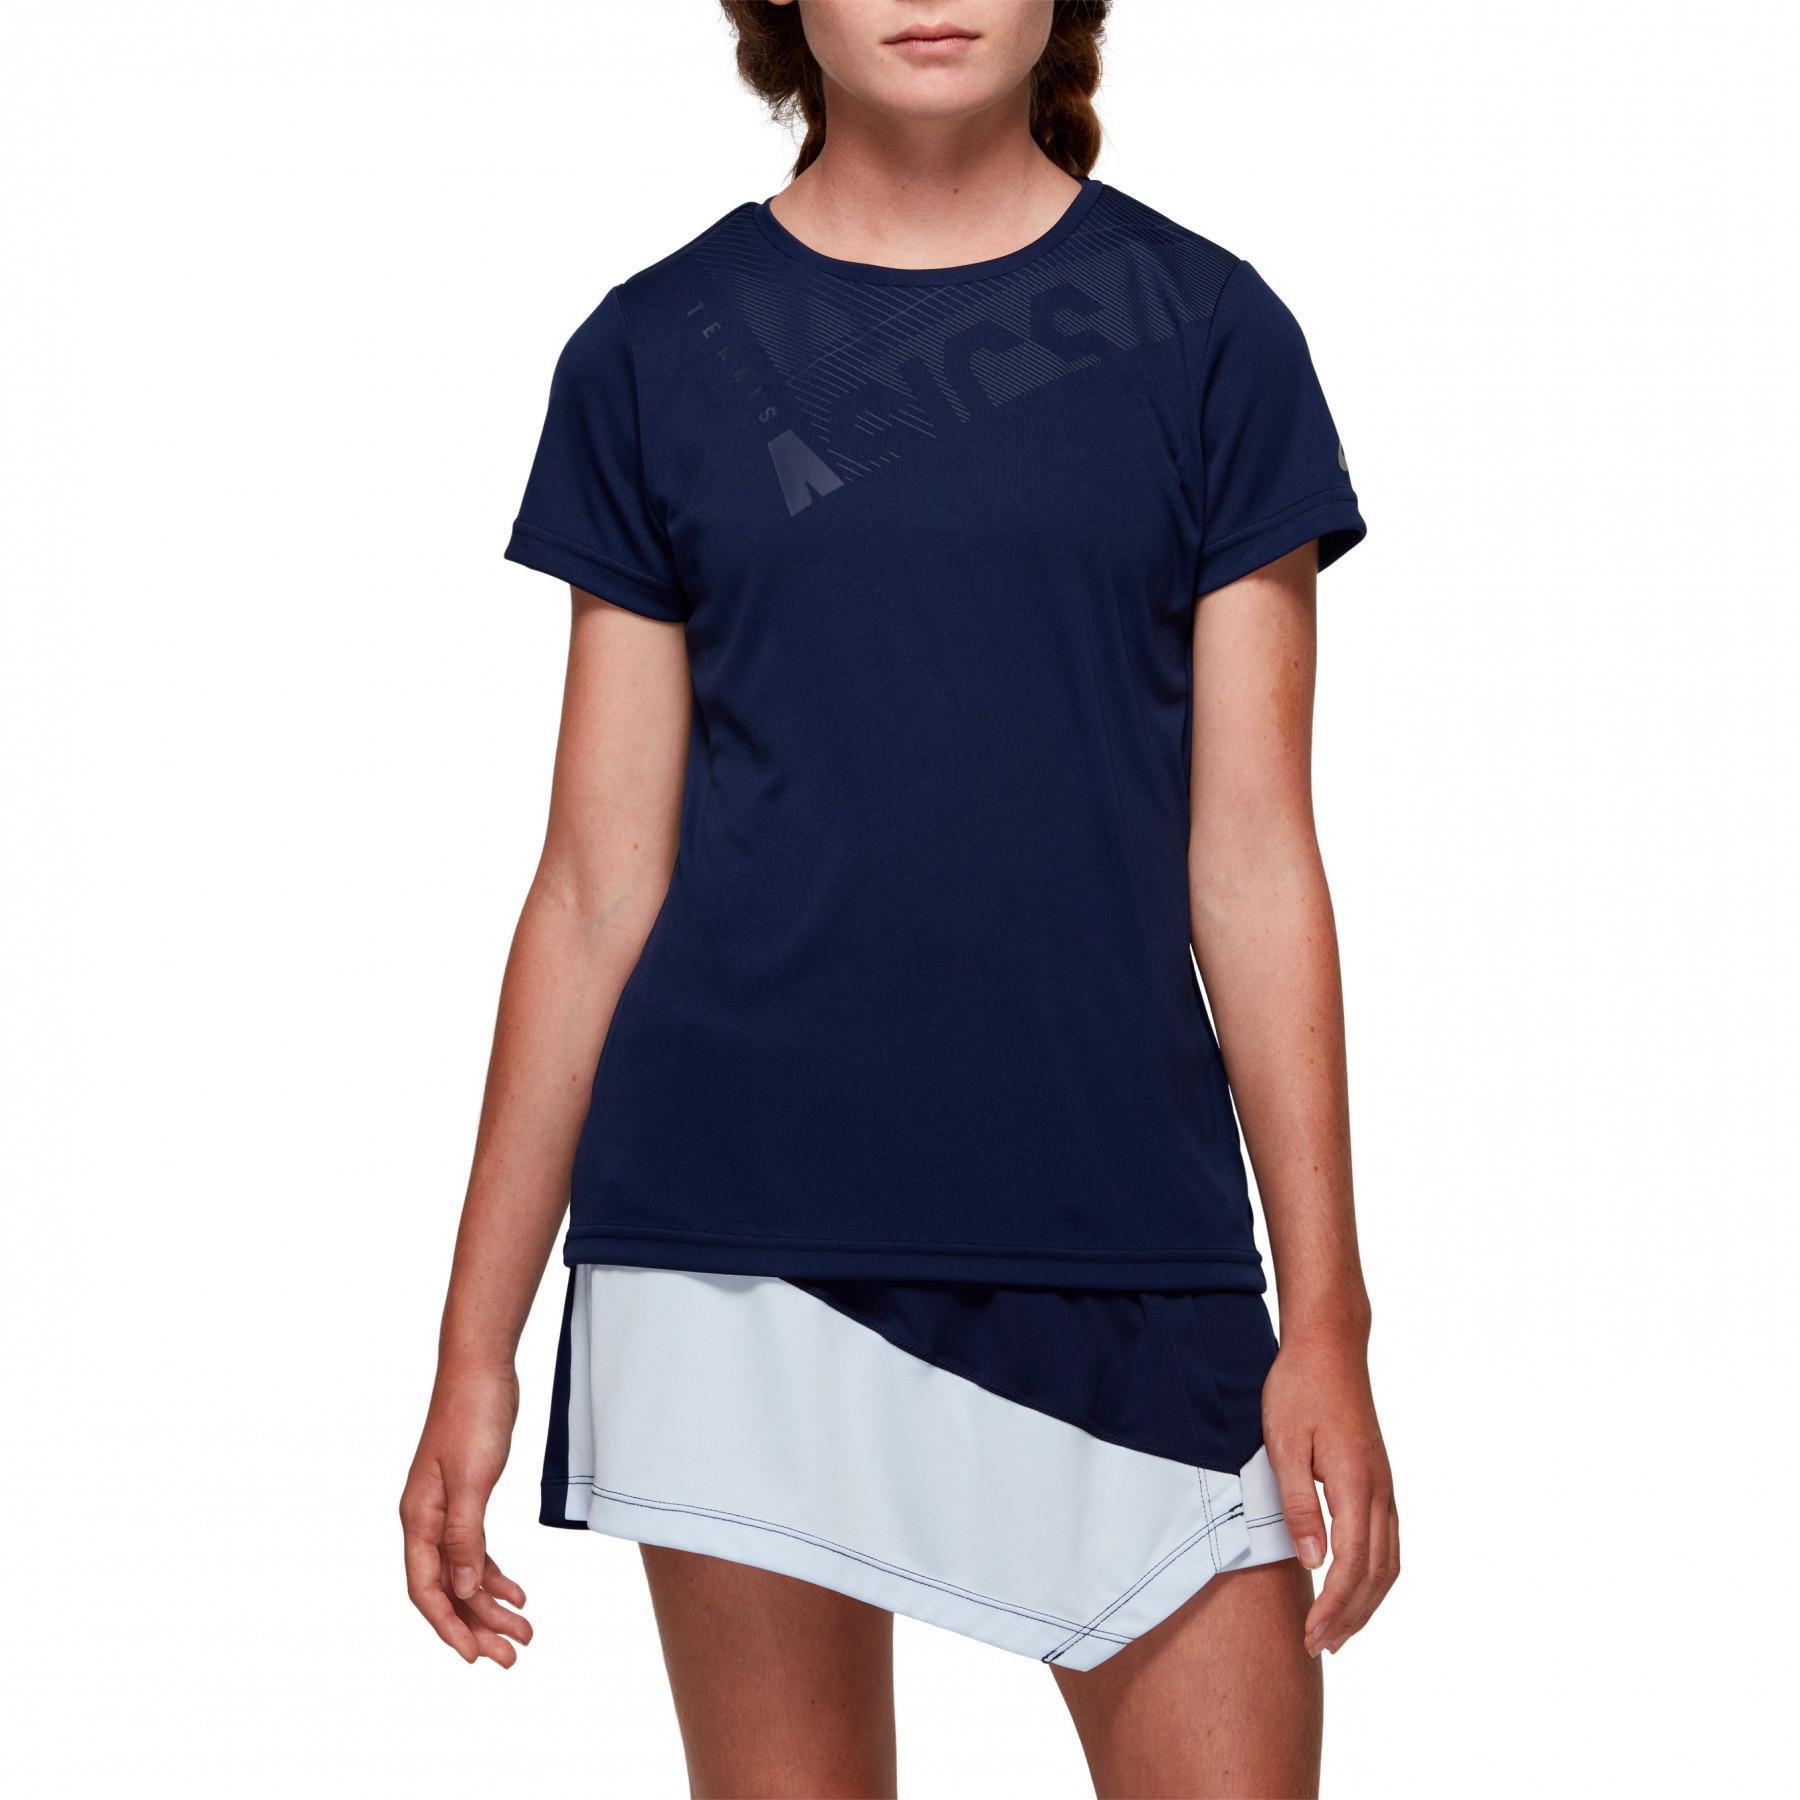 Kinder-T-shirt Asics Tennis Gpx T